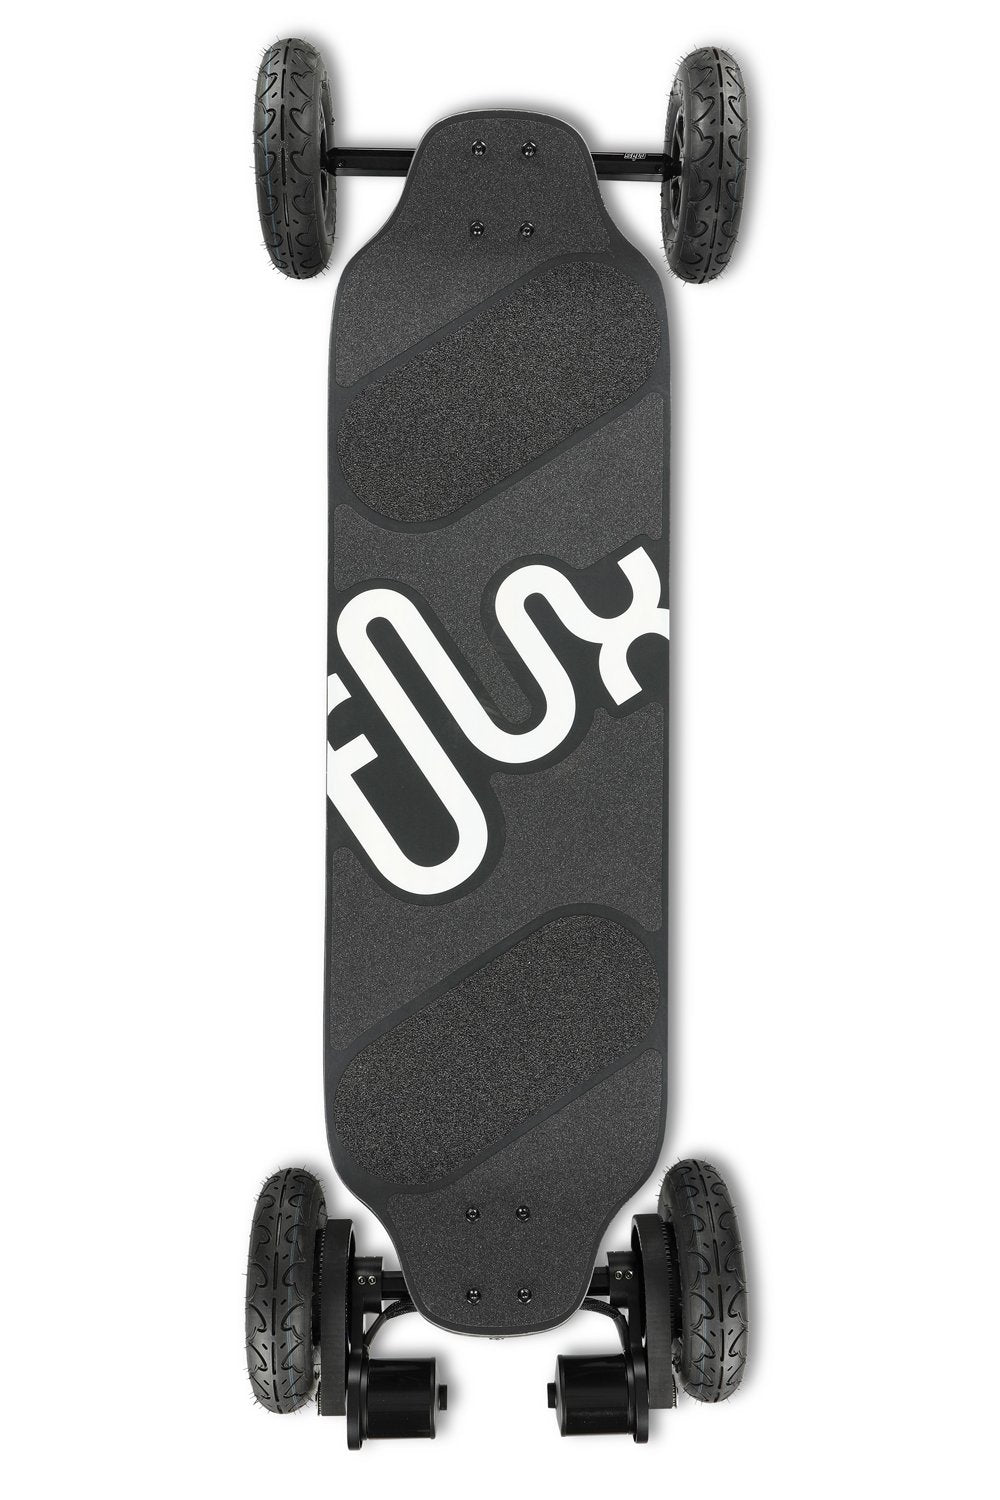 Flux AT2 Electric Skateboard